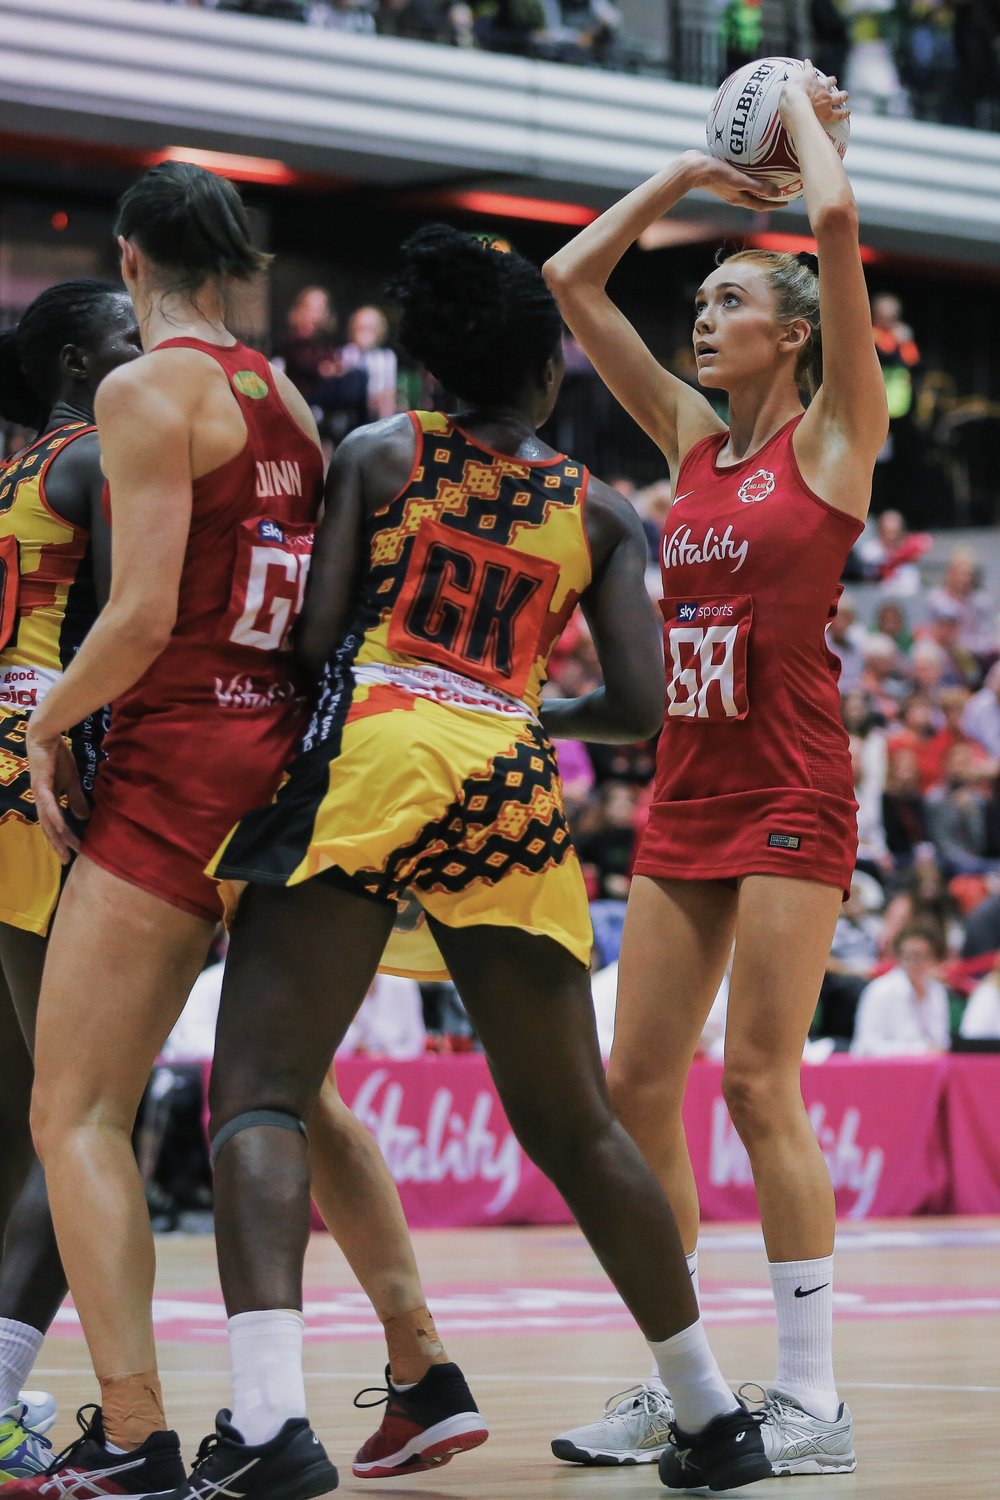 womens-netball-sport-england-uganda-international-series-16.jpg